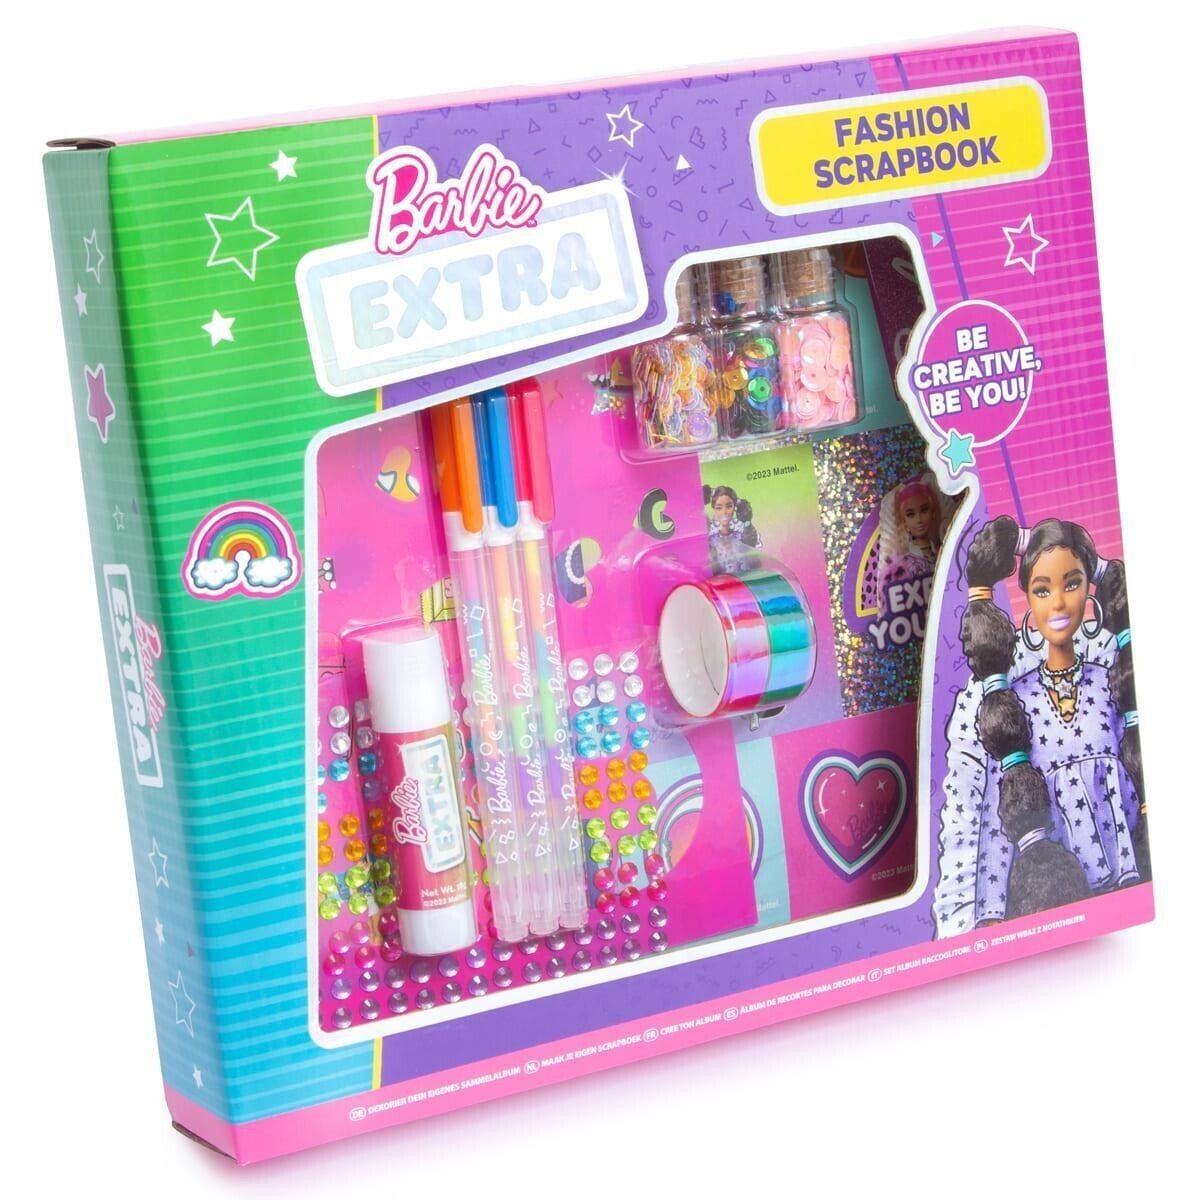 Barbie Scrapbooking Kit - Includes 99 Stickers, Scrapbook, Markers